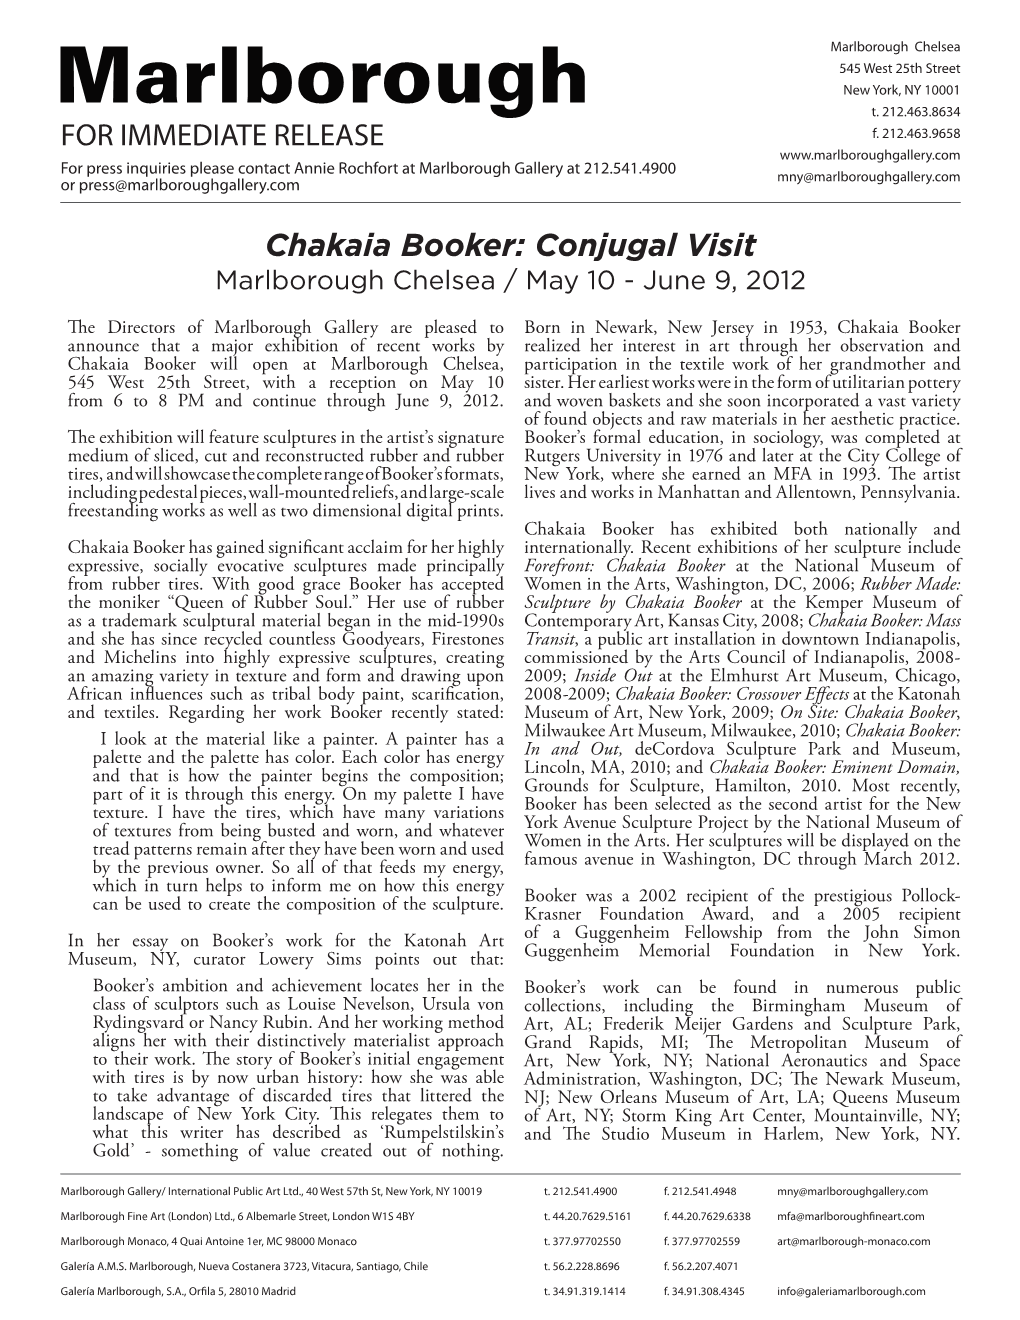 Chakaia Booker: Conjugal Visit Marlborough Chelsea / May 10 - June 9, 2012